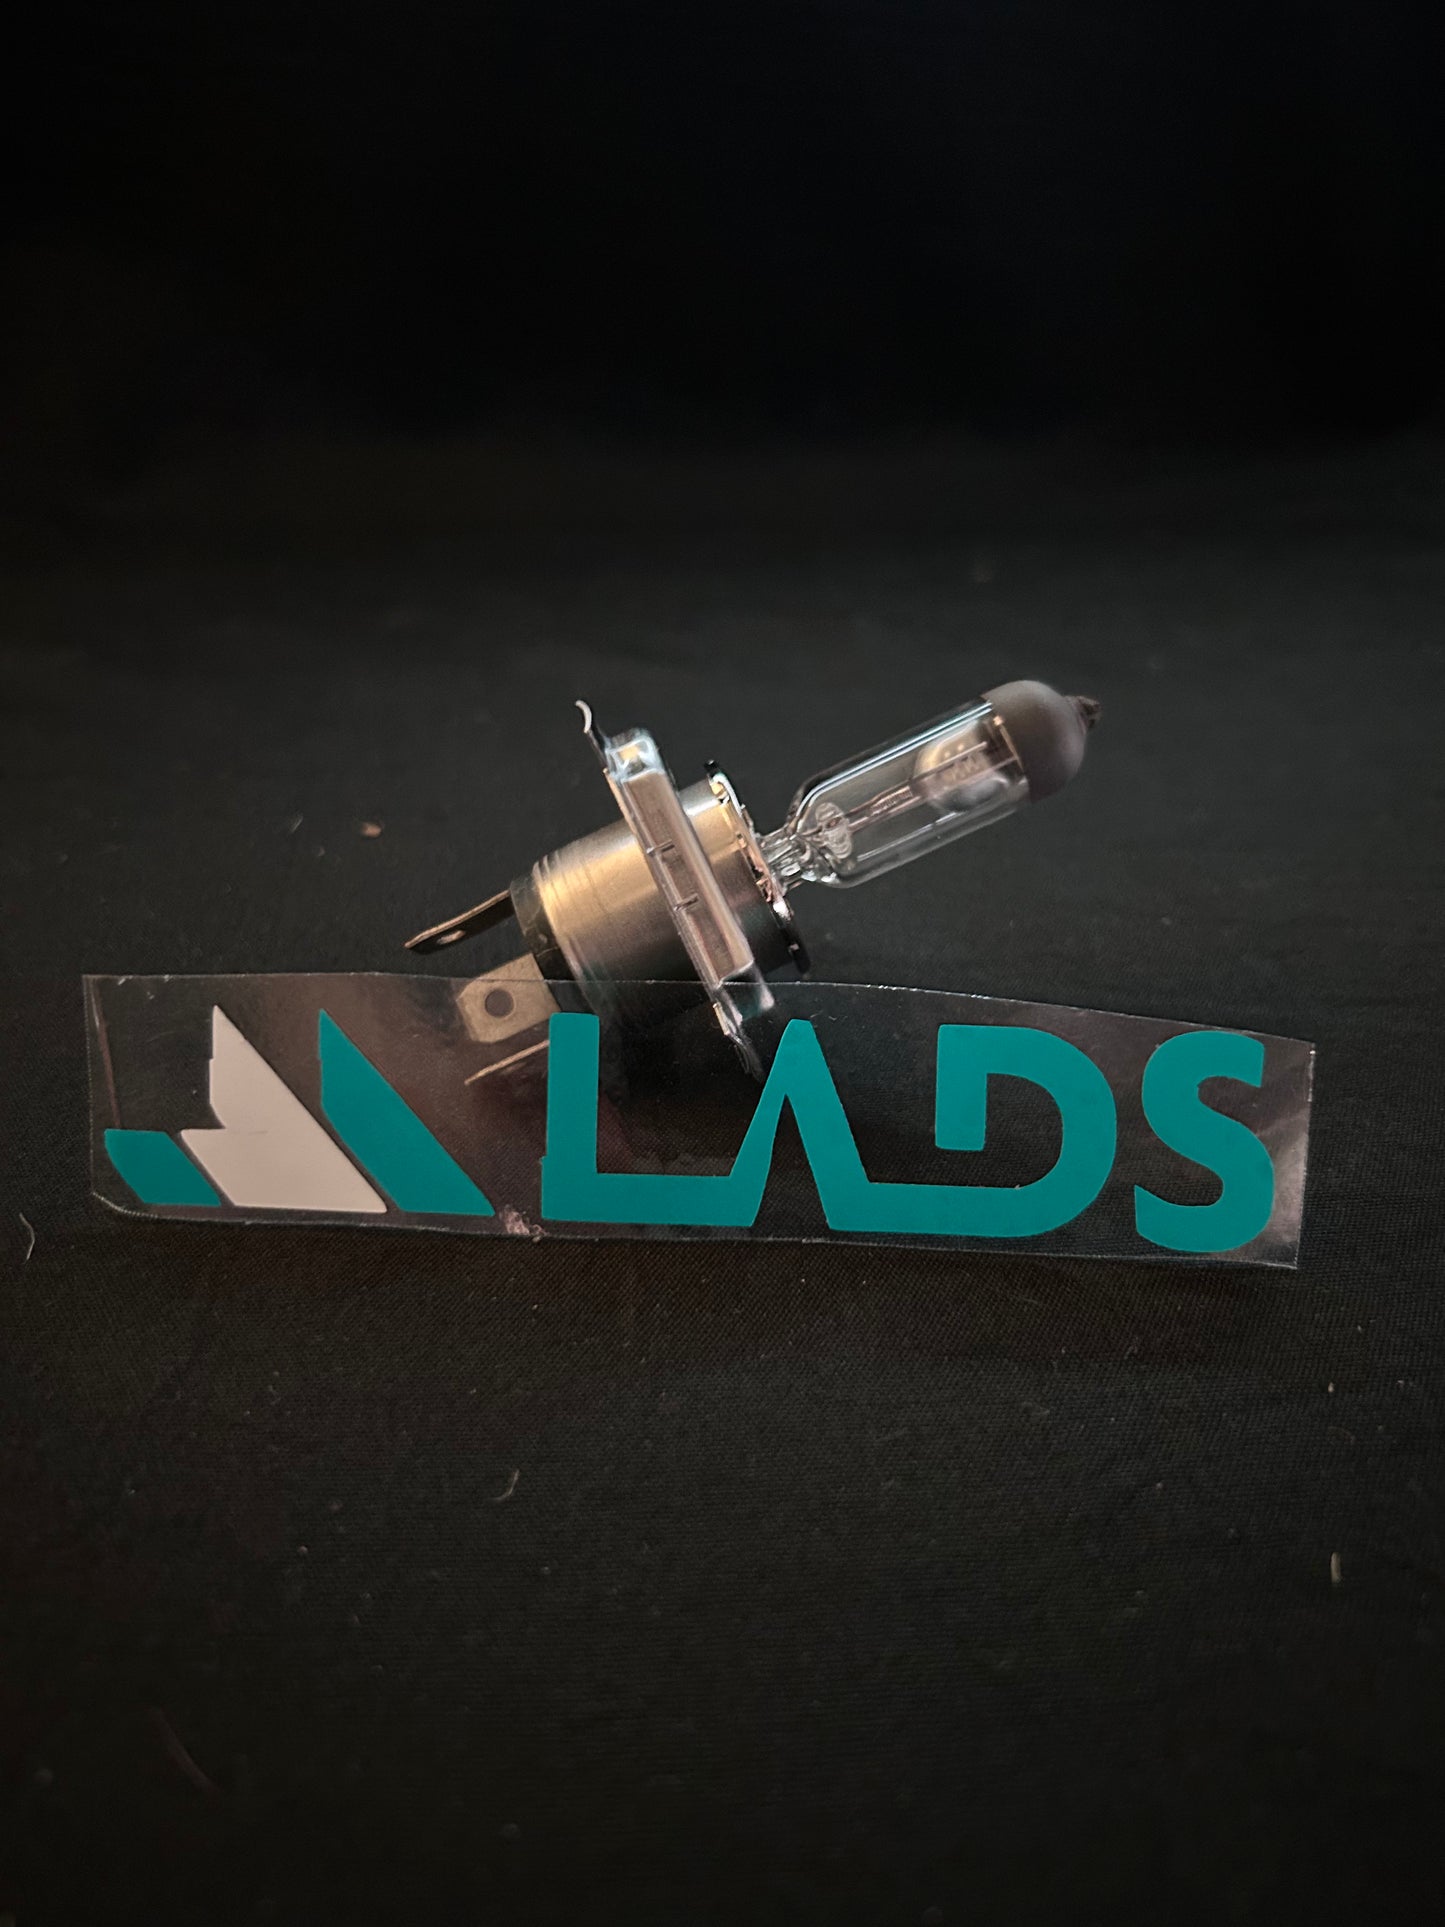 LDAS stickers